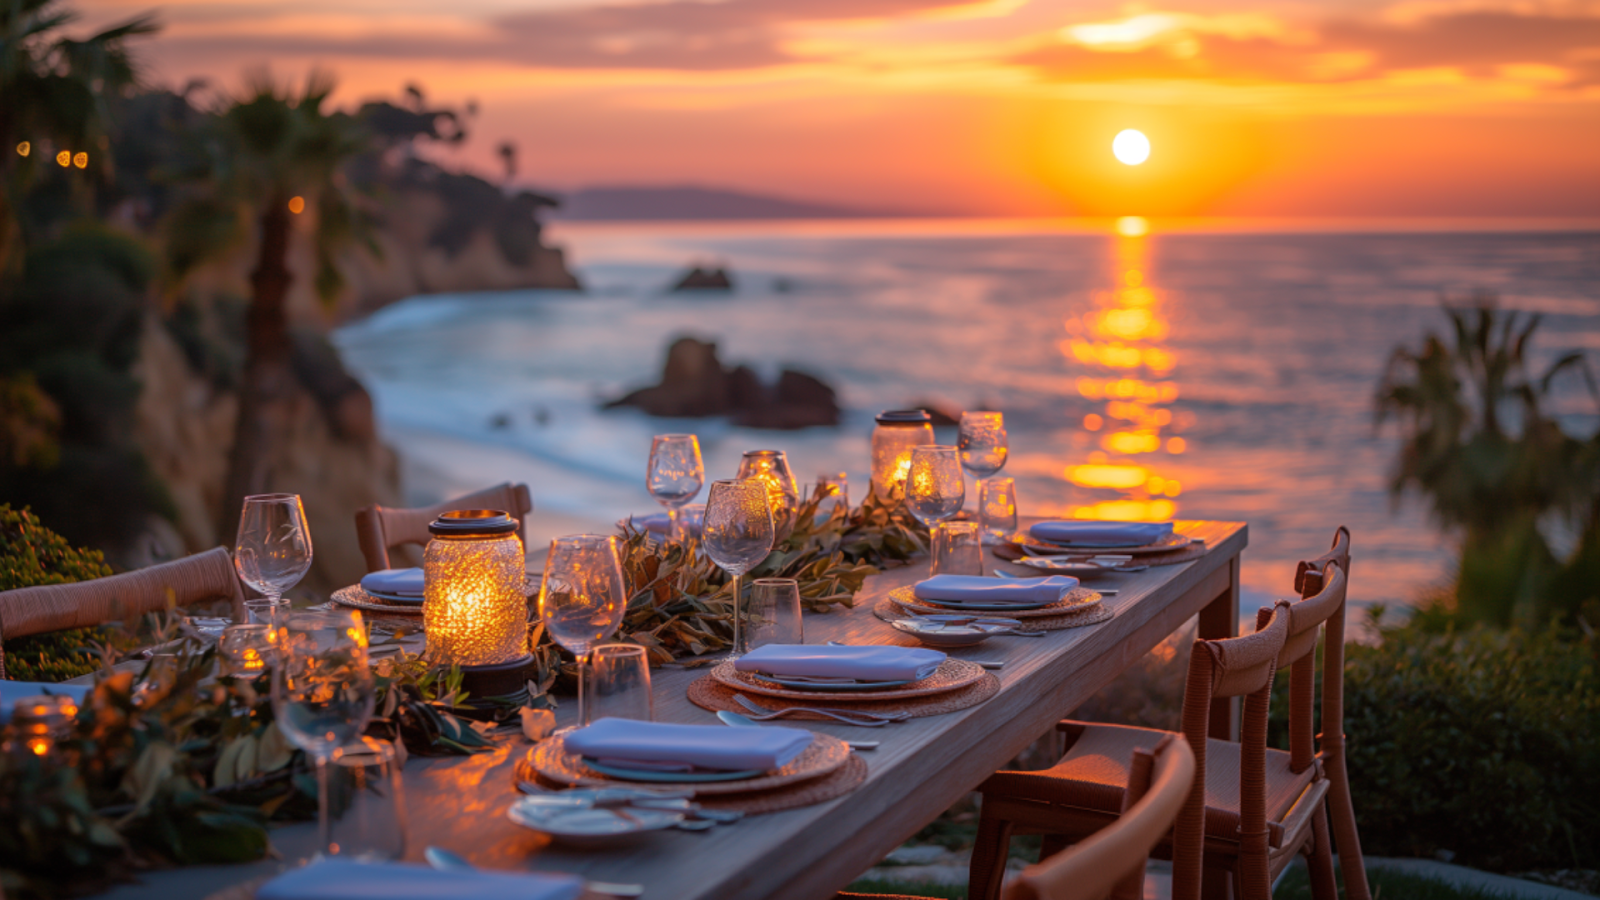 Exquisite dining setup on terrace overlooking Croatia's coastline.